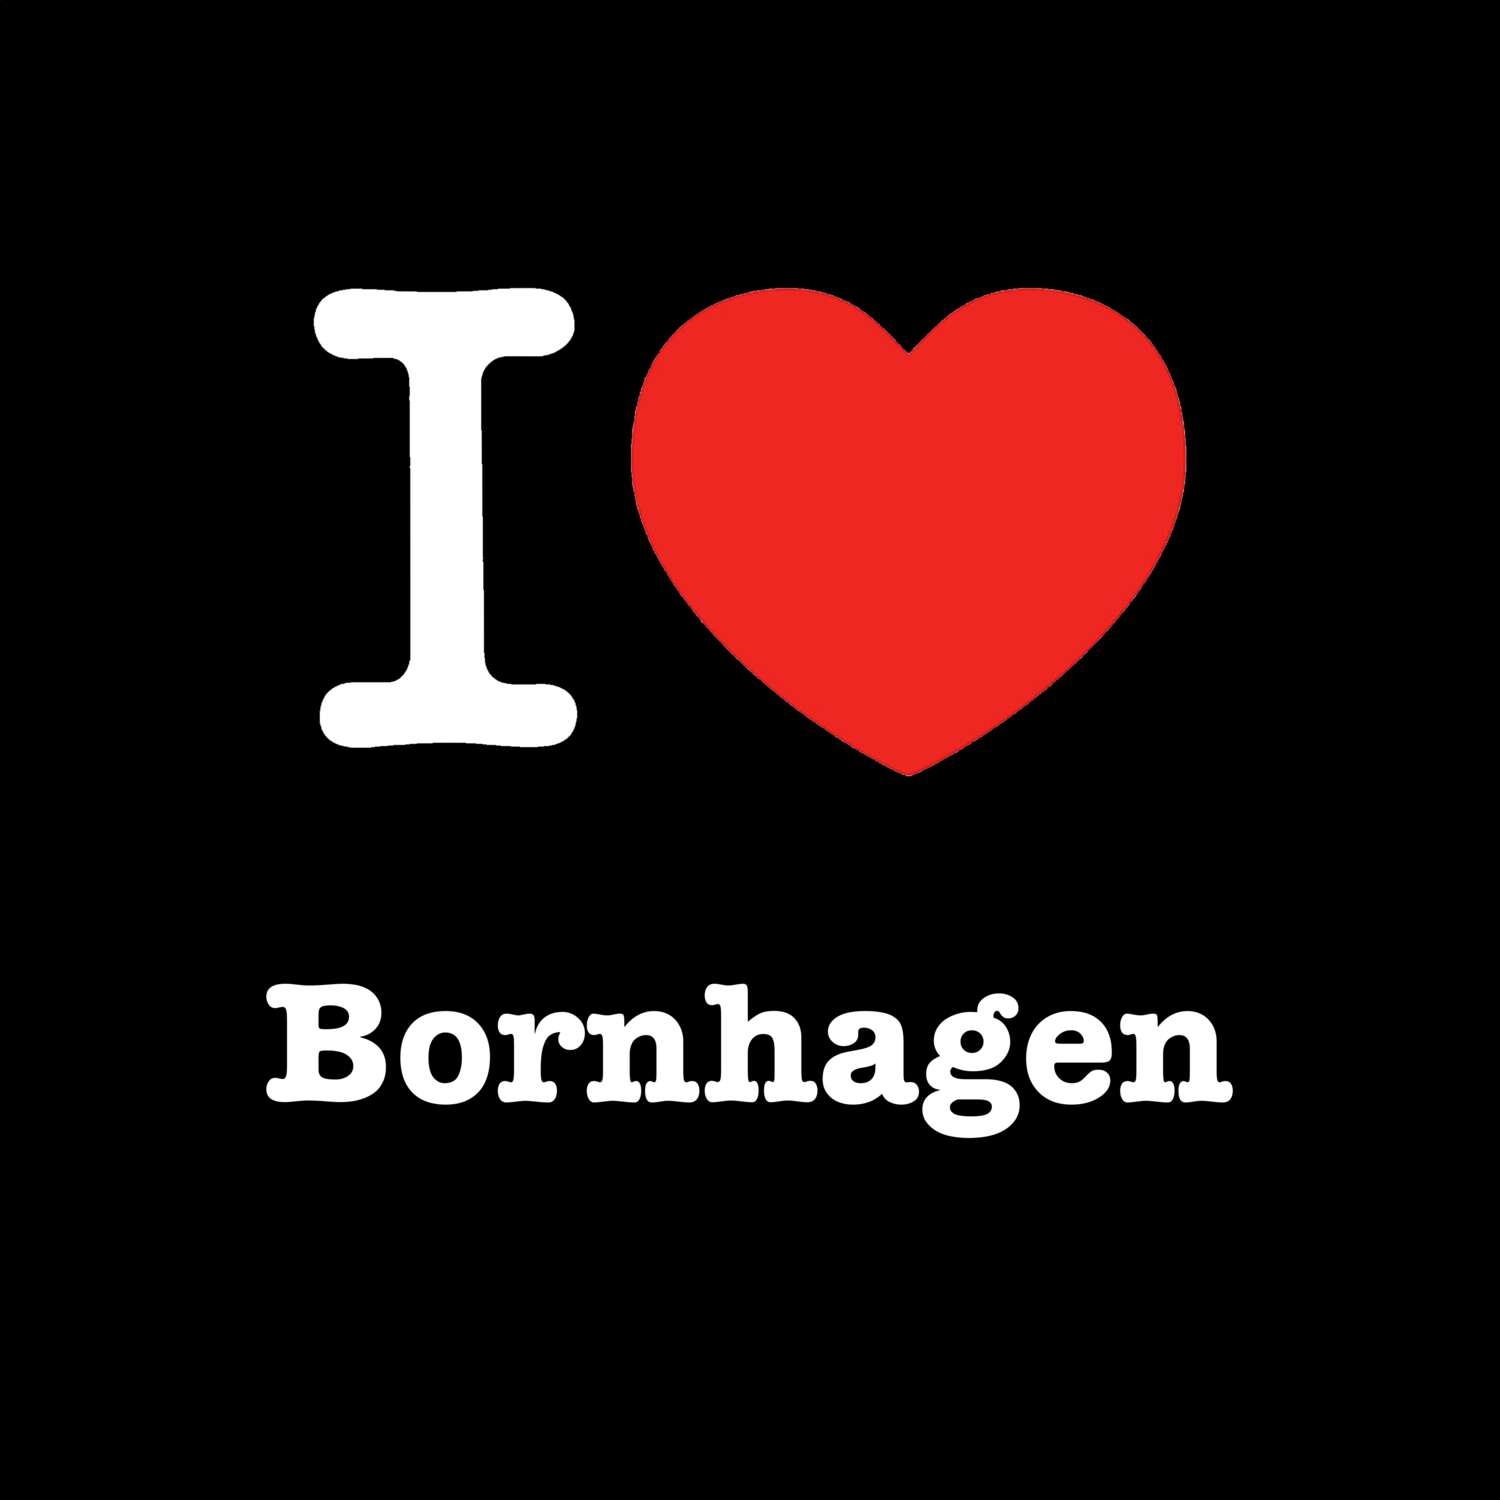 Bornhagen T-Shirt »I love«